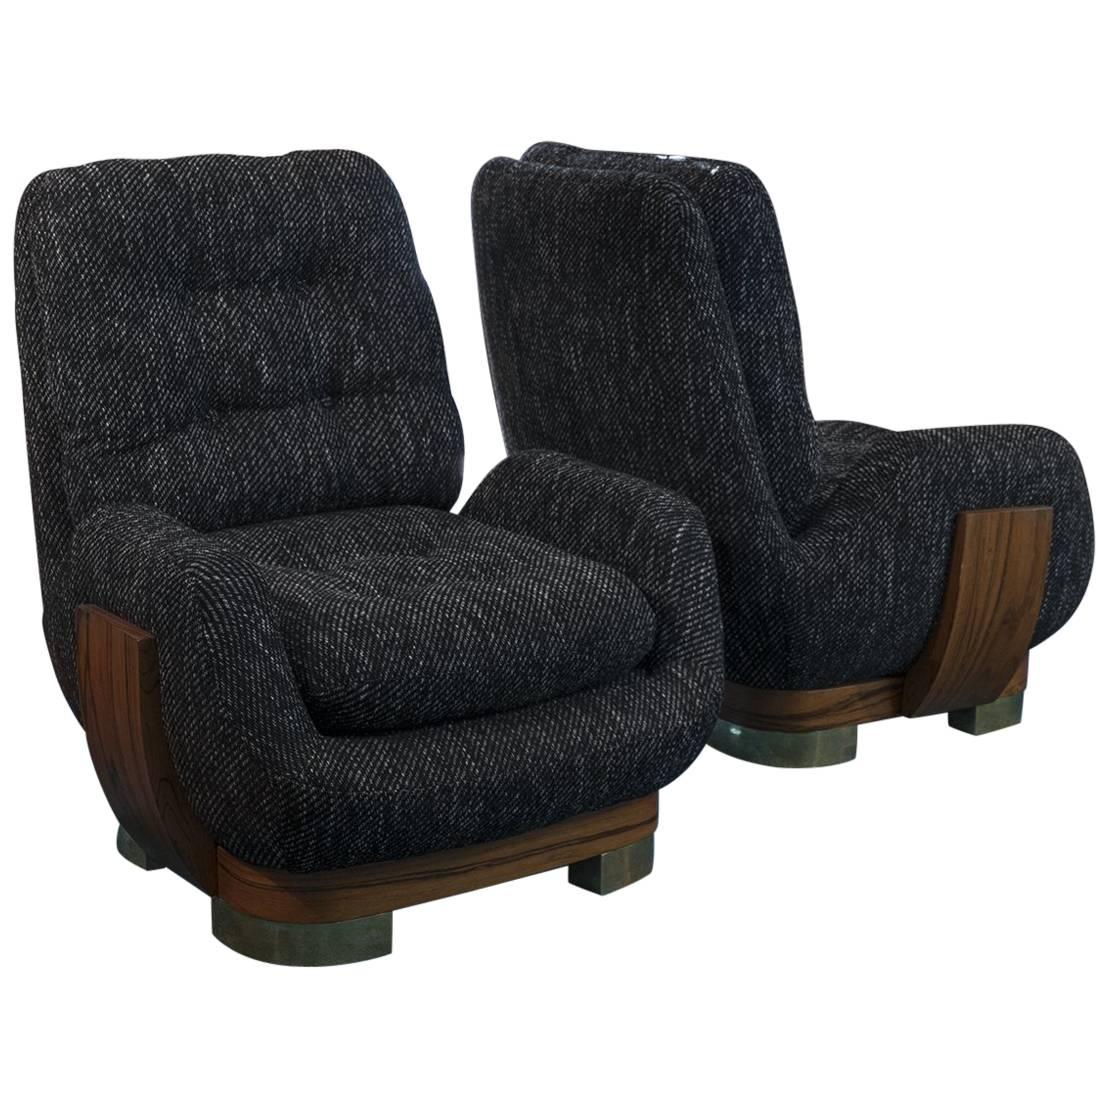 1960s Italian Pair of Lounge Chairs